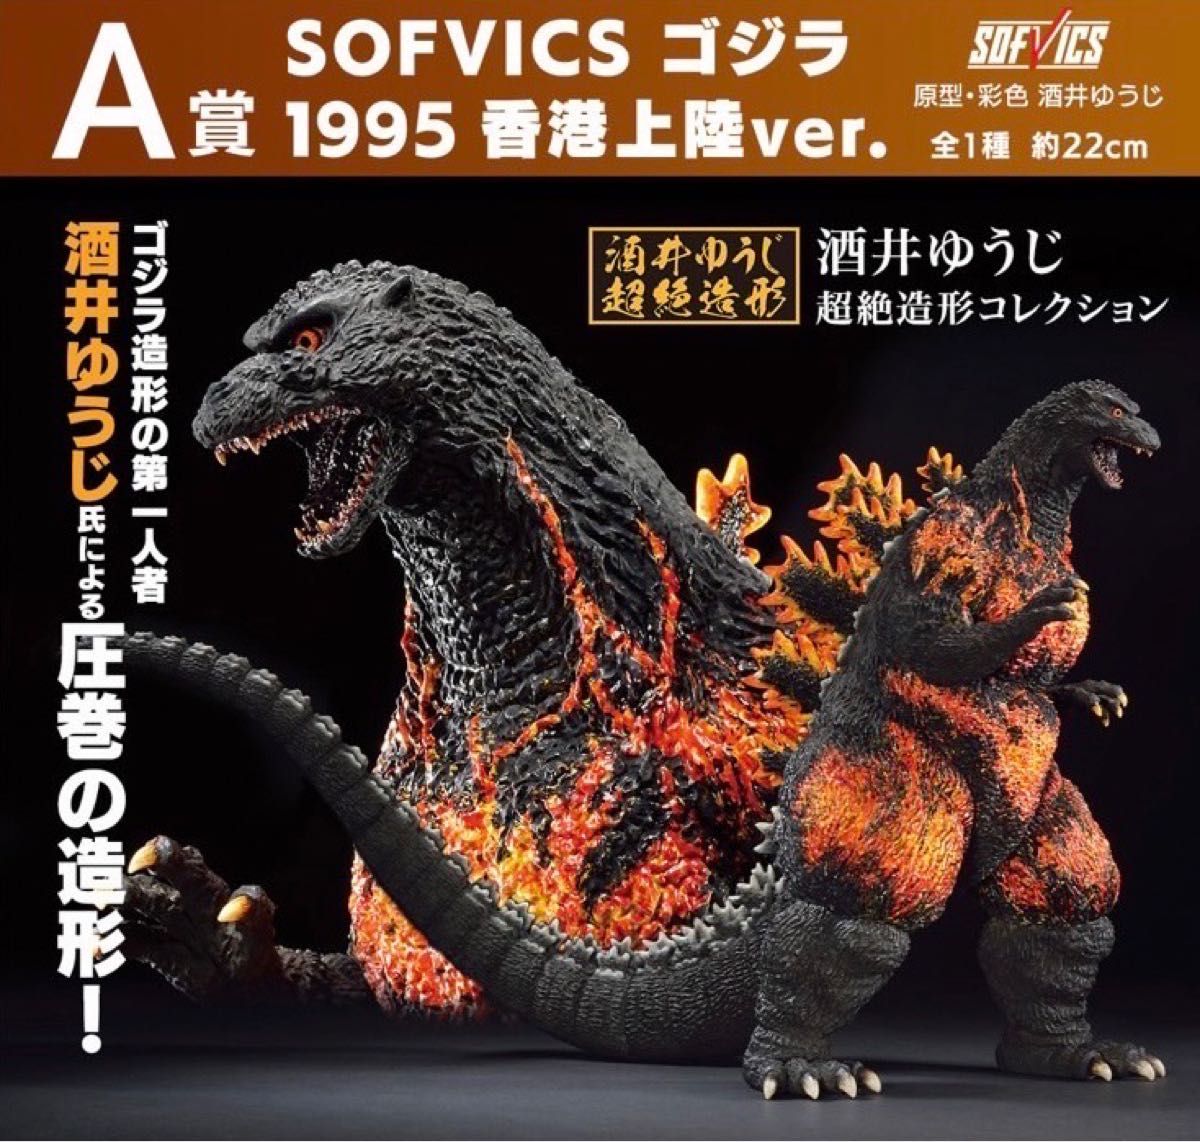 FIG]A賞 SOFVICS ゴジラ 1995 香港上陸ver. 一番くじ ゴジラ 大怪獣 